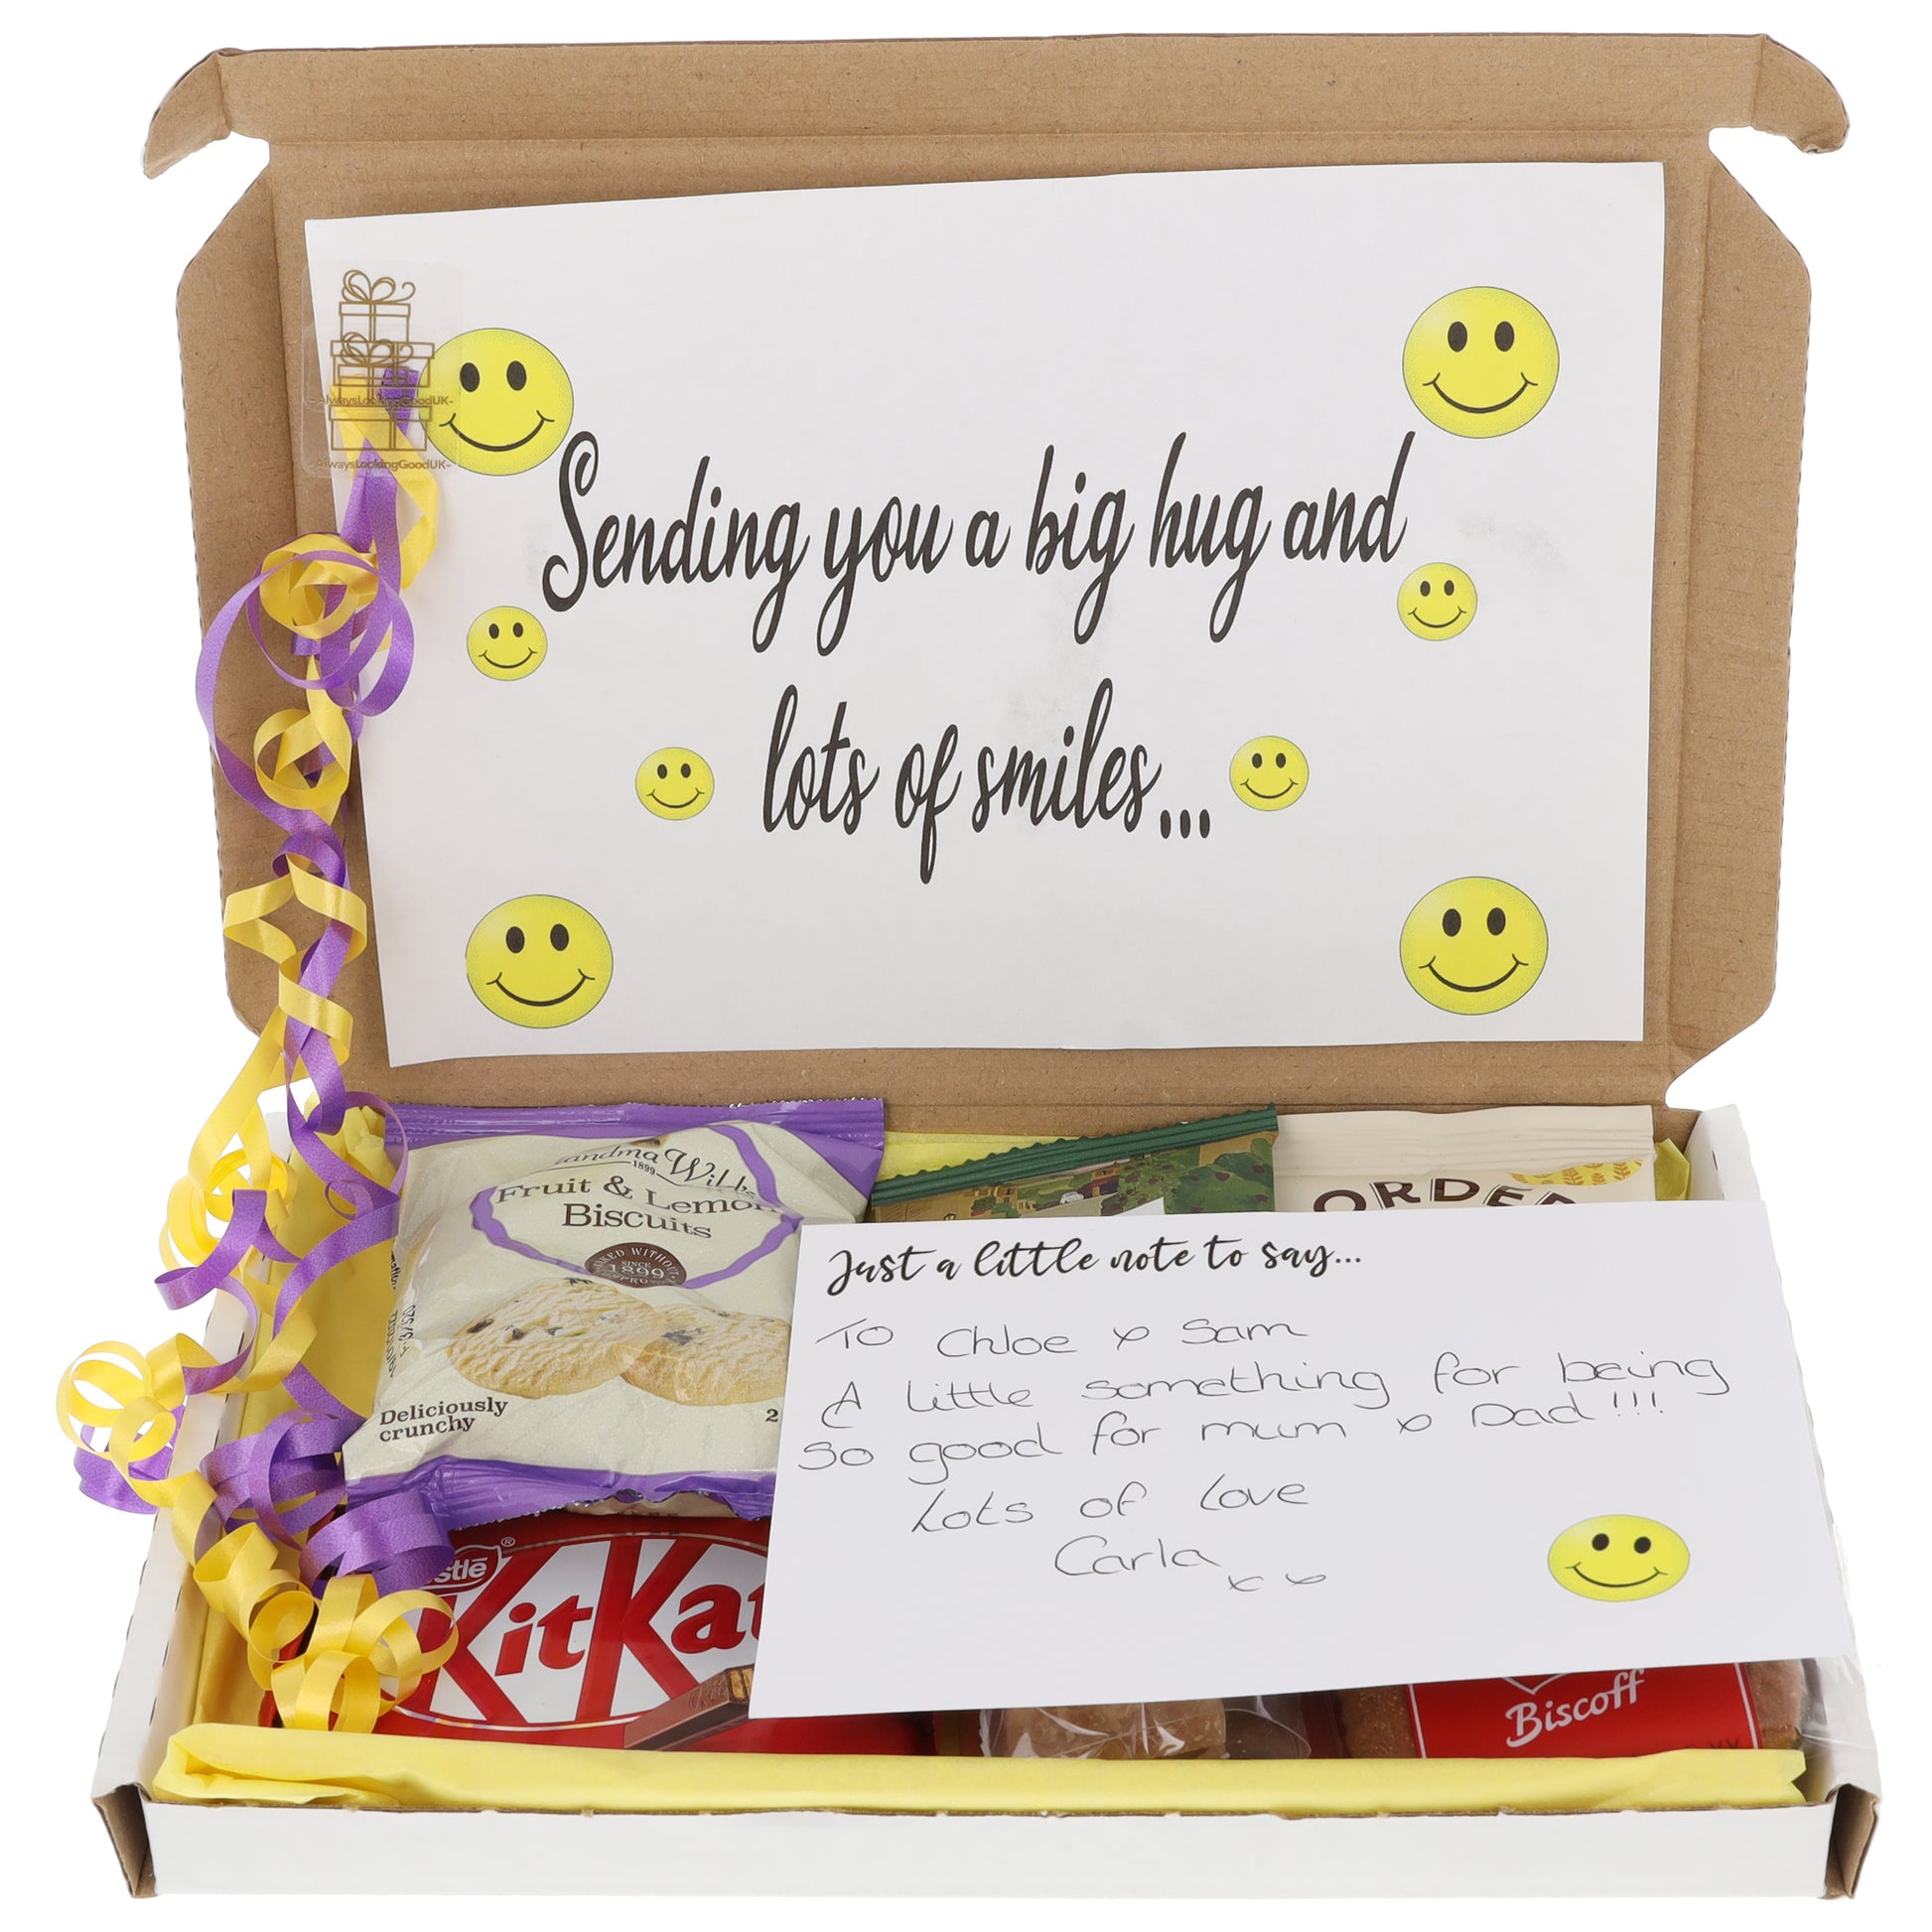 Afternoon Tea & Biscuit Hamper Letterbox Gift Box  - Always Looking Good -   